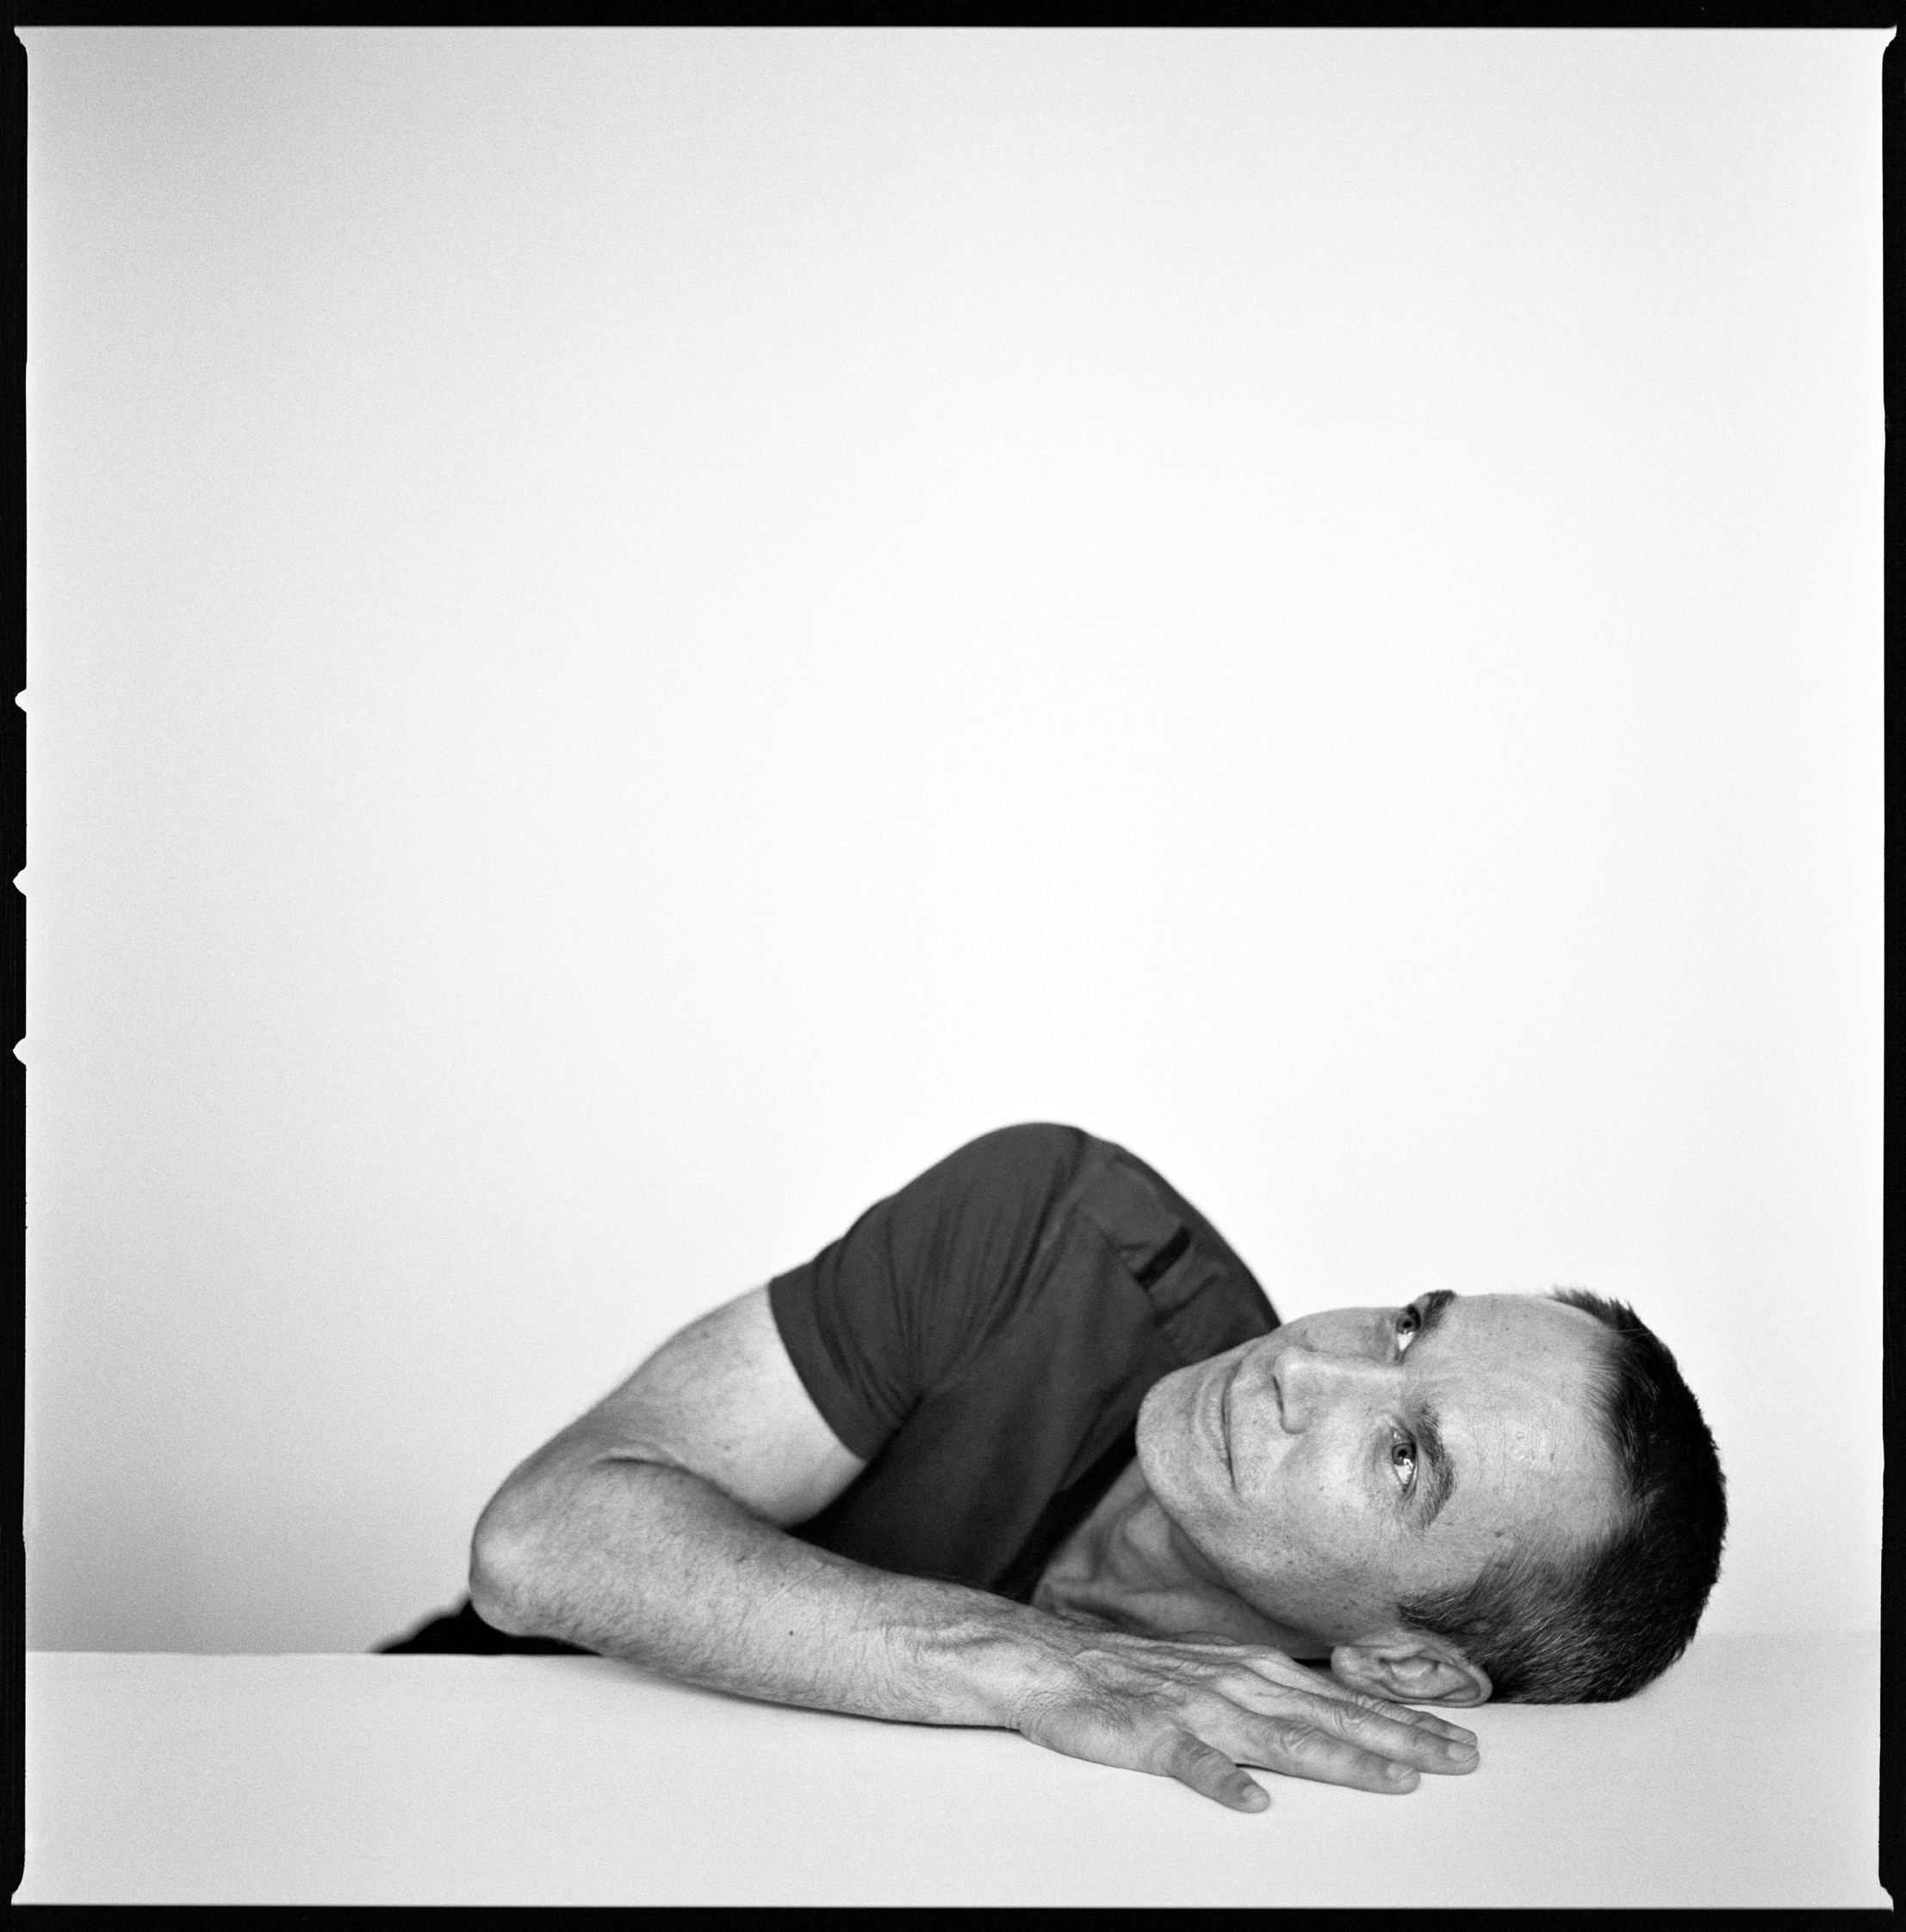 Jeff Koons, New York studio